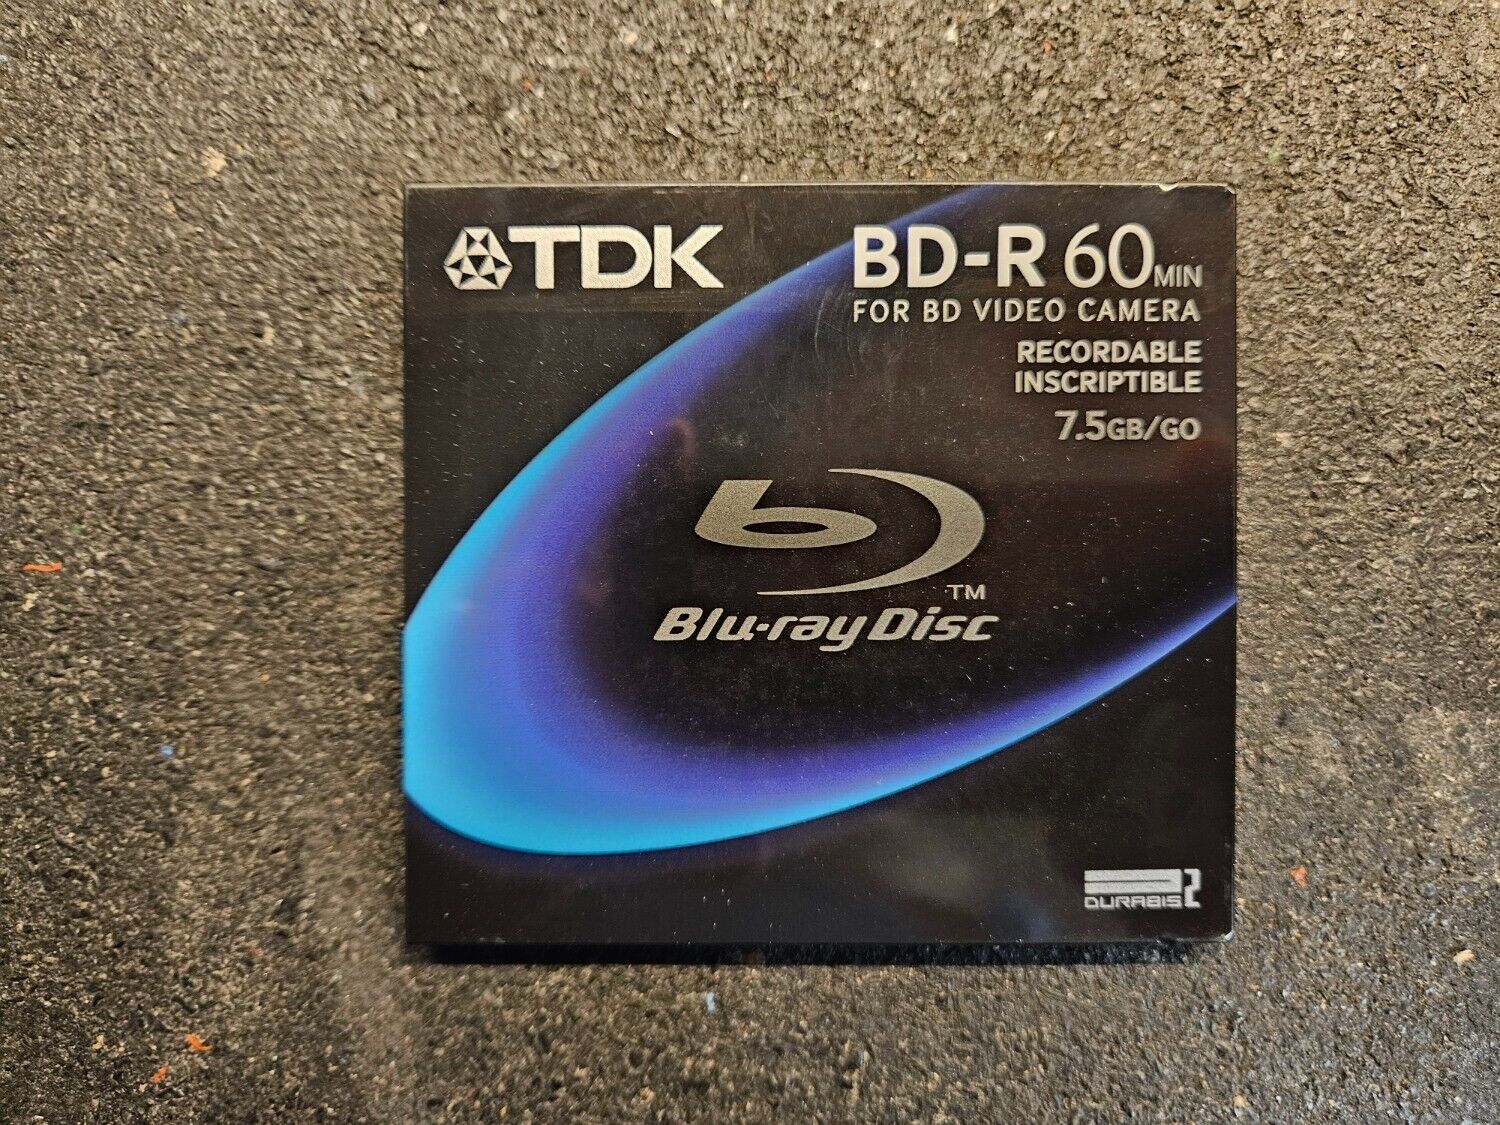 TDK BD-R 60 Min Blu-ray Disk for BD Video Camera